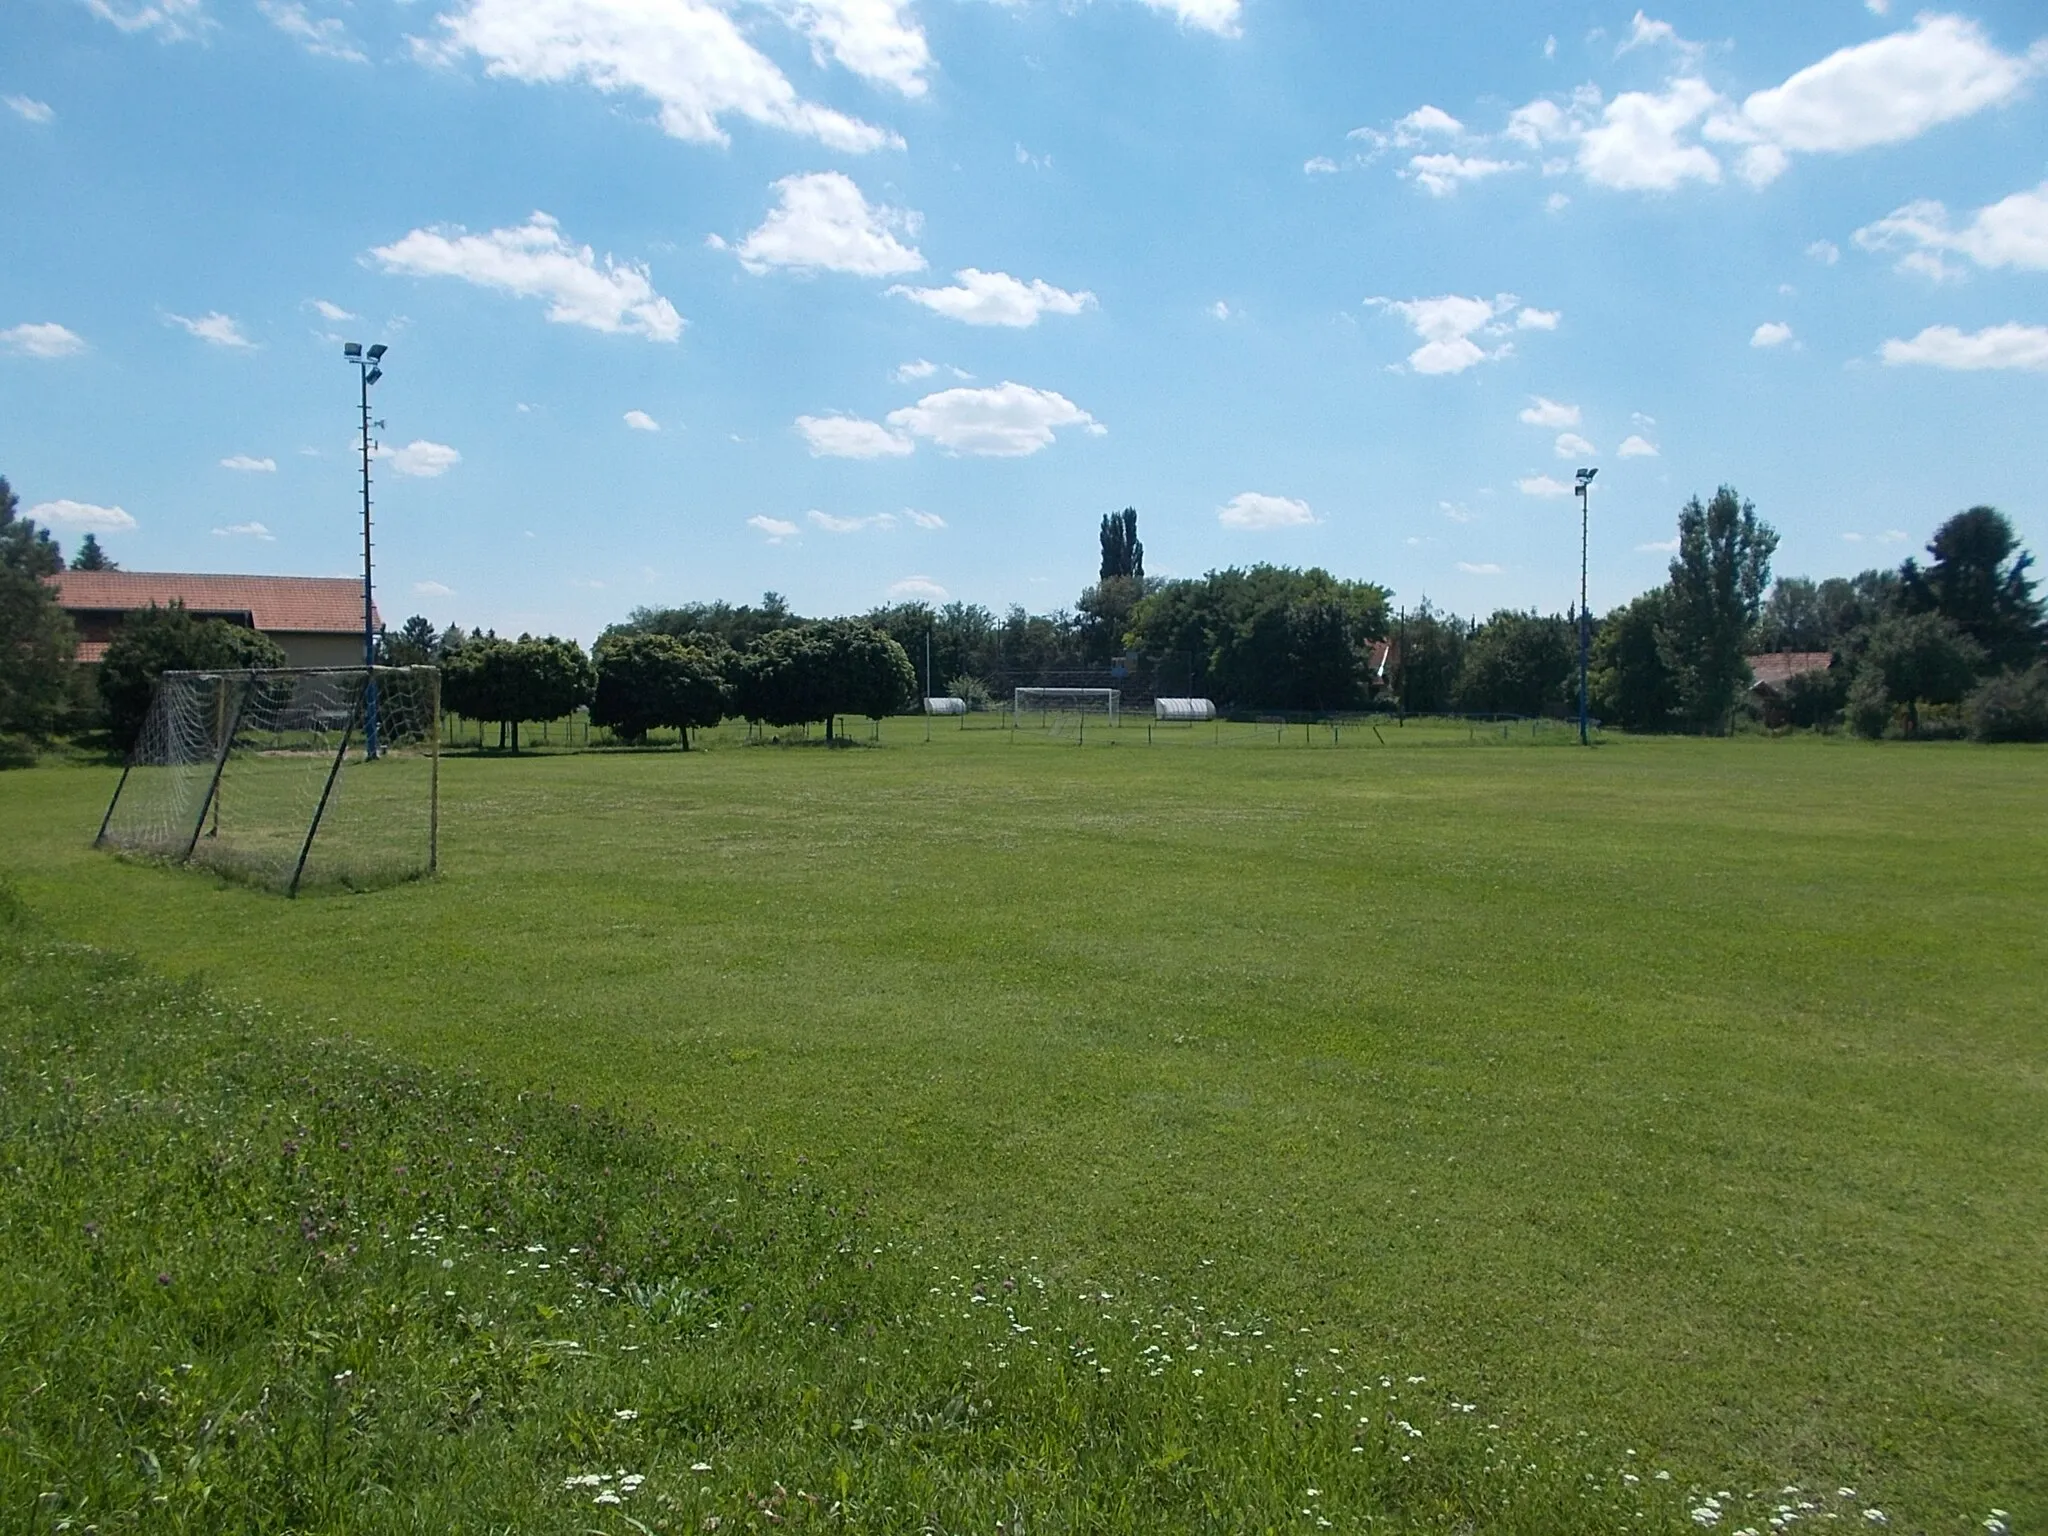 Photo showing: : Sipos Ferenc sports complex or V.A.F.C. sports field or City sports complex. - 34(?)Dömsödi út, Újtelep neighborhood, Ráckeve, Pest County.